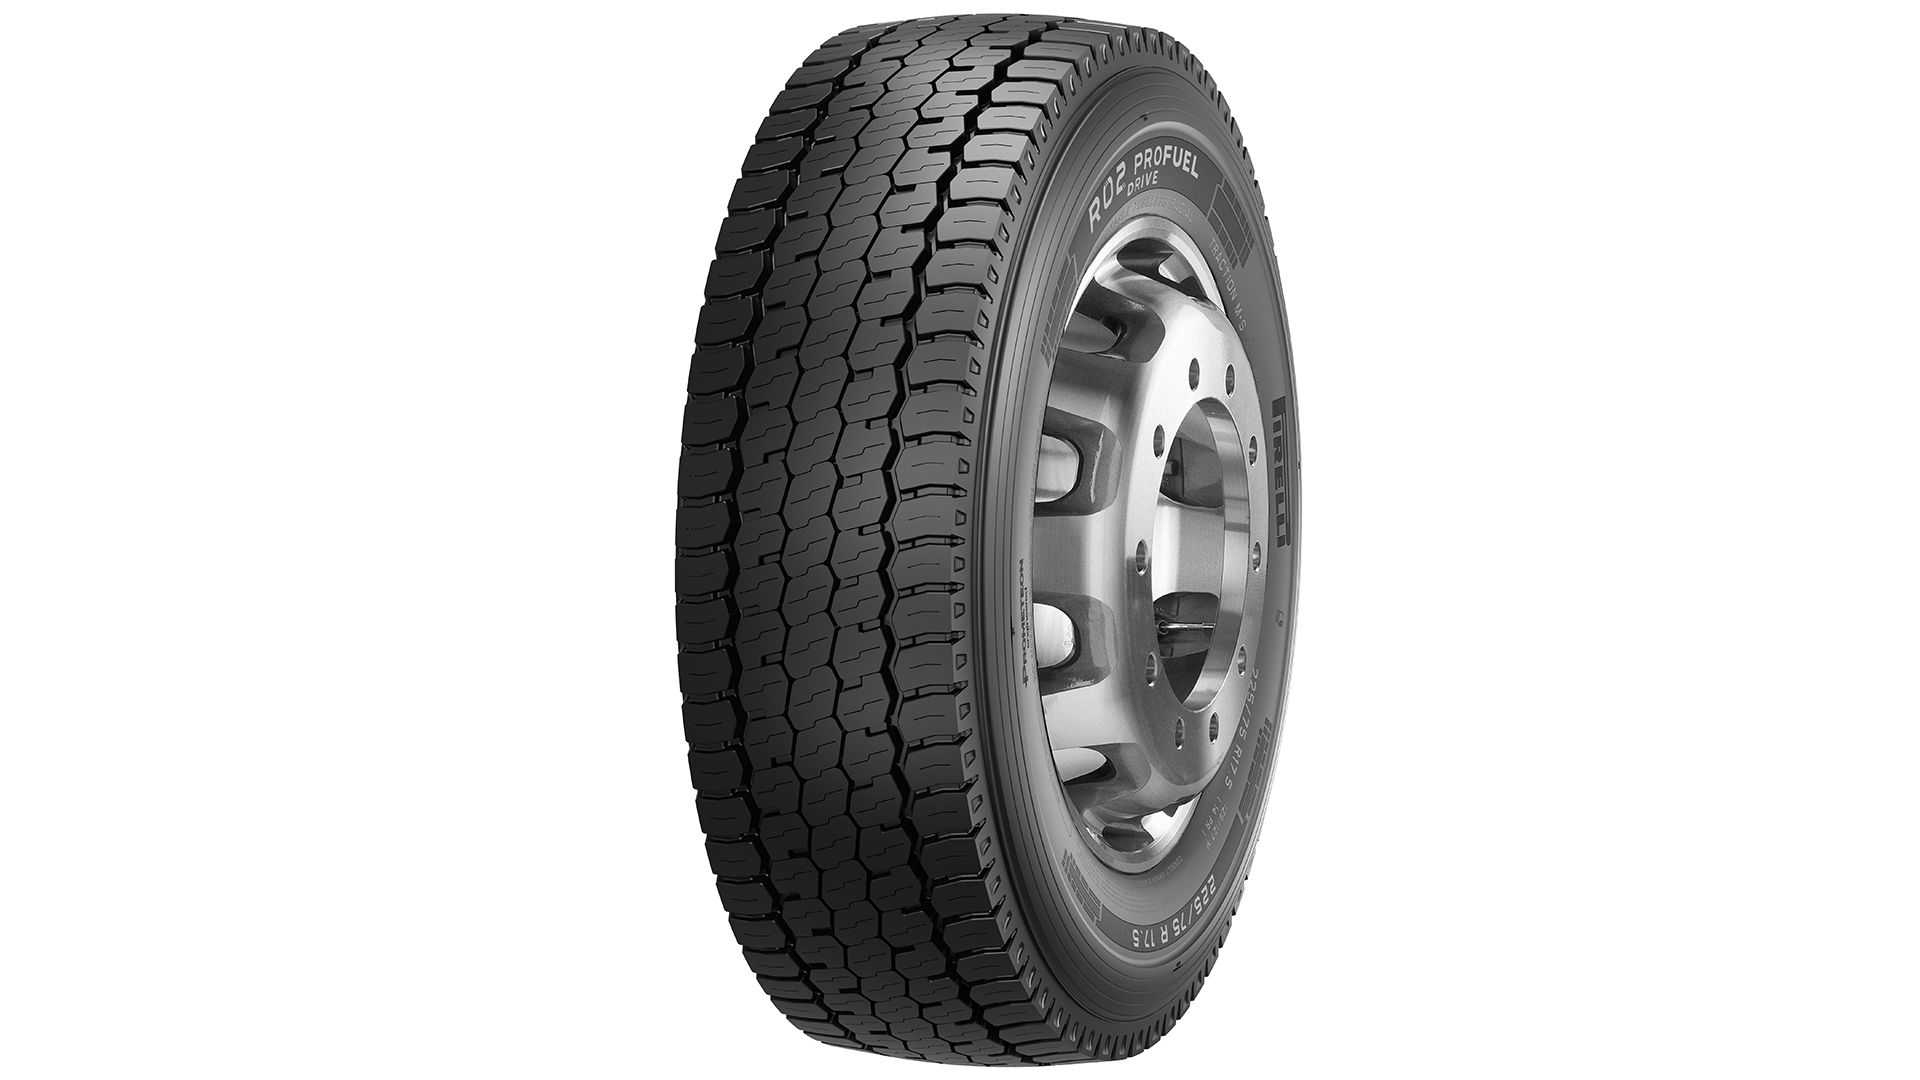 Gomme Nuove Pirelli 235/75 R17.5 132M 2PR R02profueld (8.00mm) pneumatici nuovi Estivo